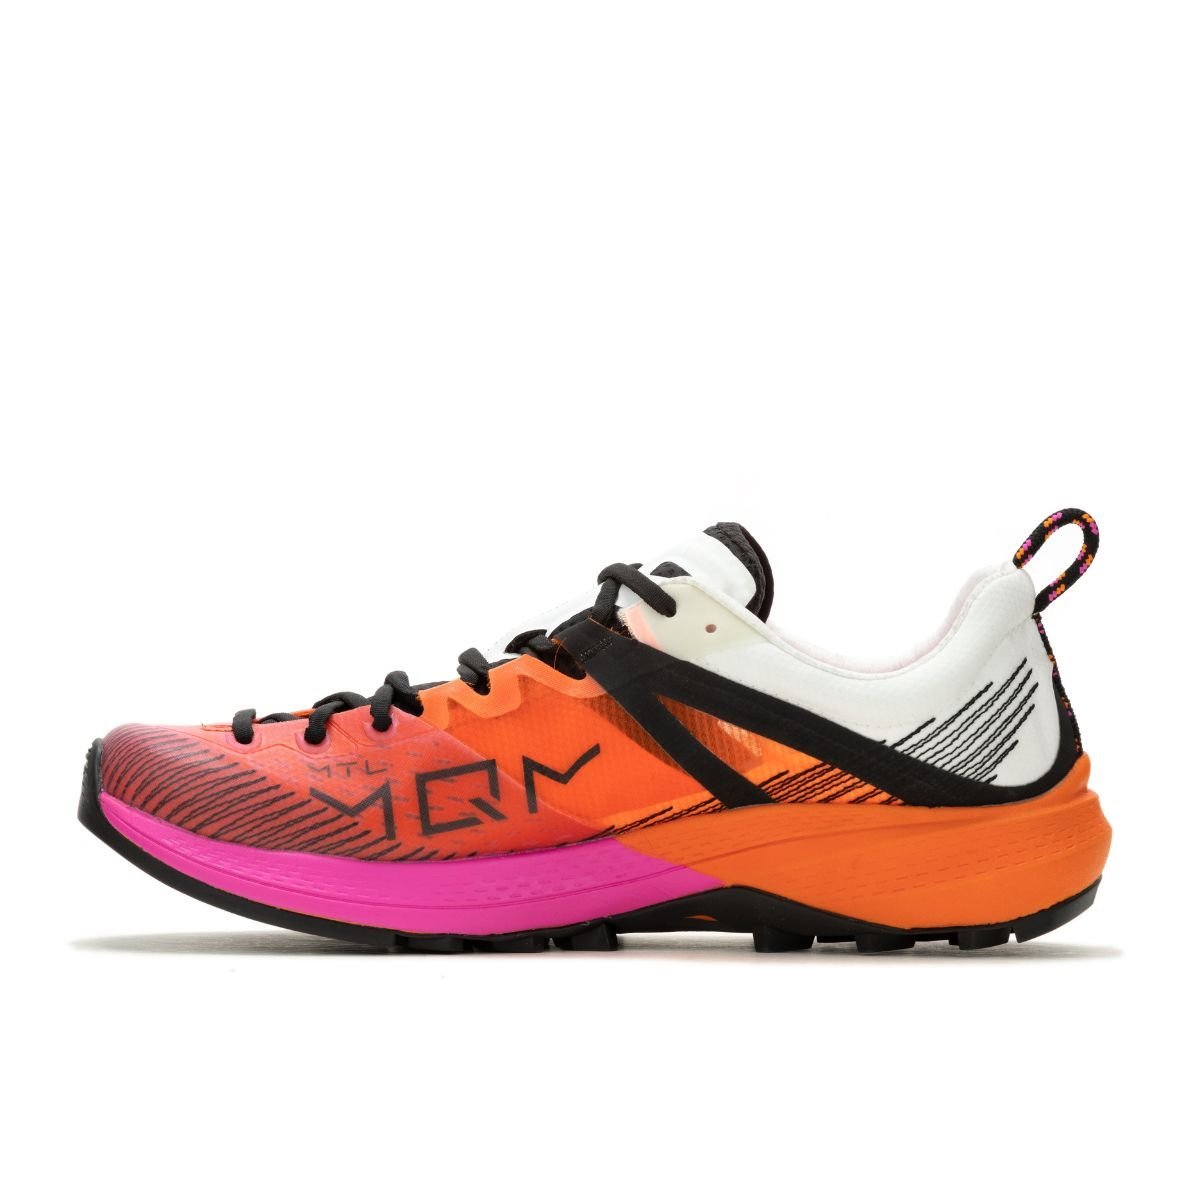 Topánky Merrell J037669 MTL MQM M - biela/oranžová